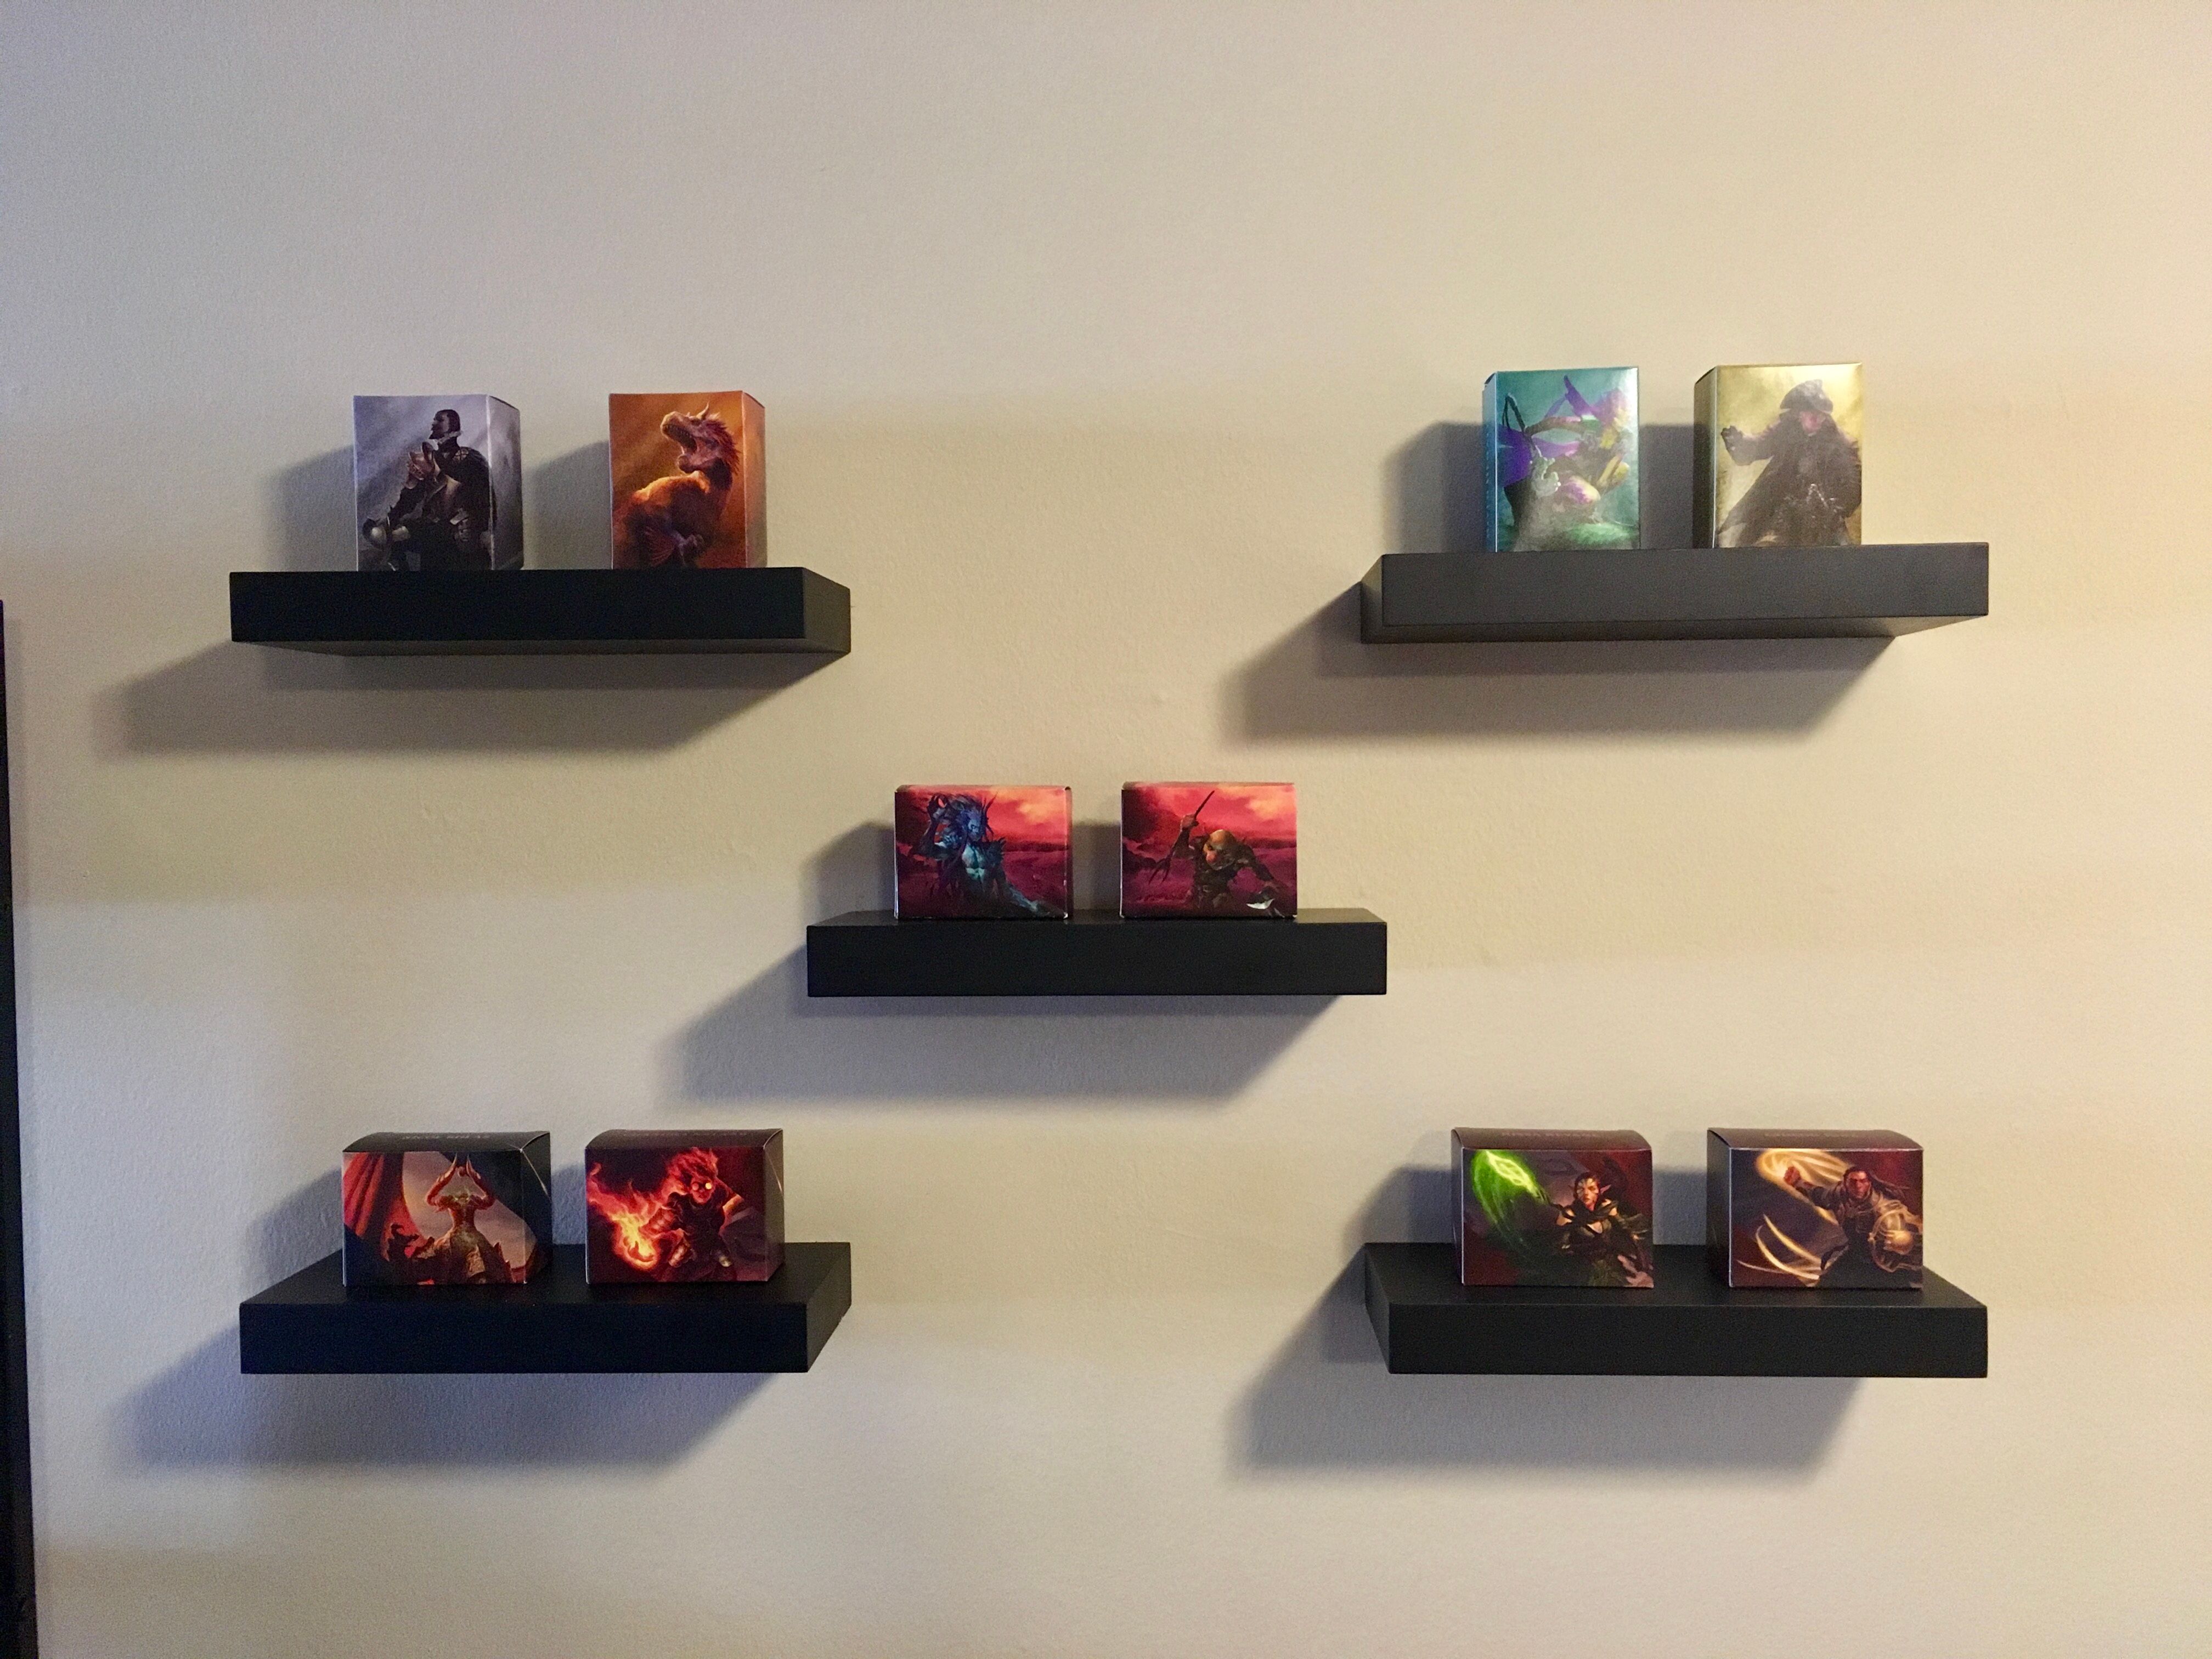 Shelves with MTG cards @iamredbar